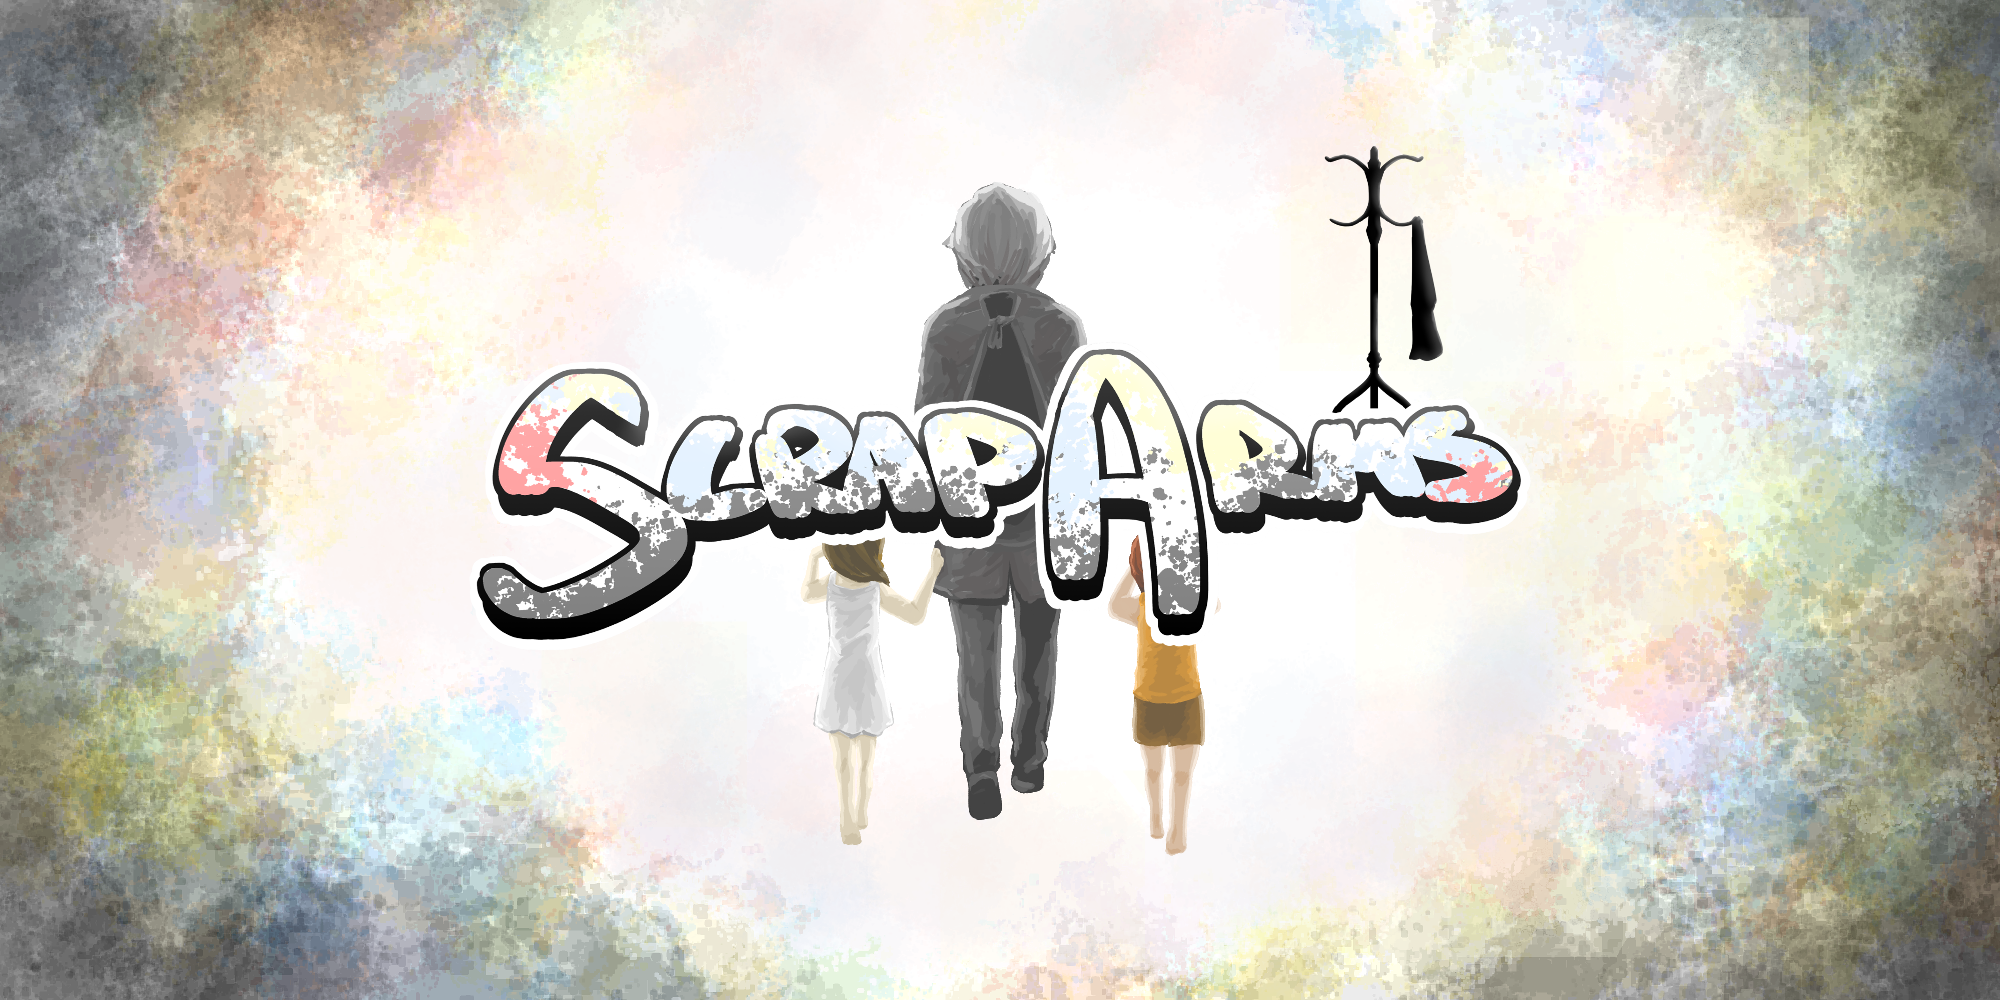 Scrap Arms [Old 2019 demo]